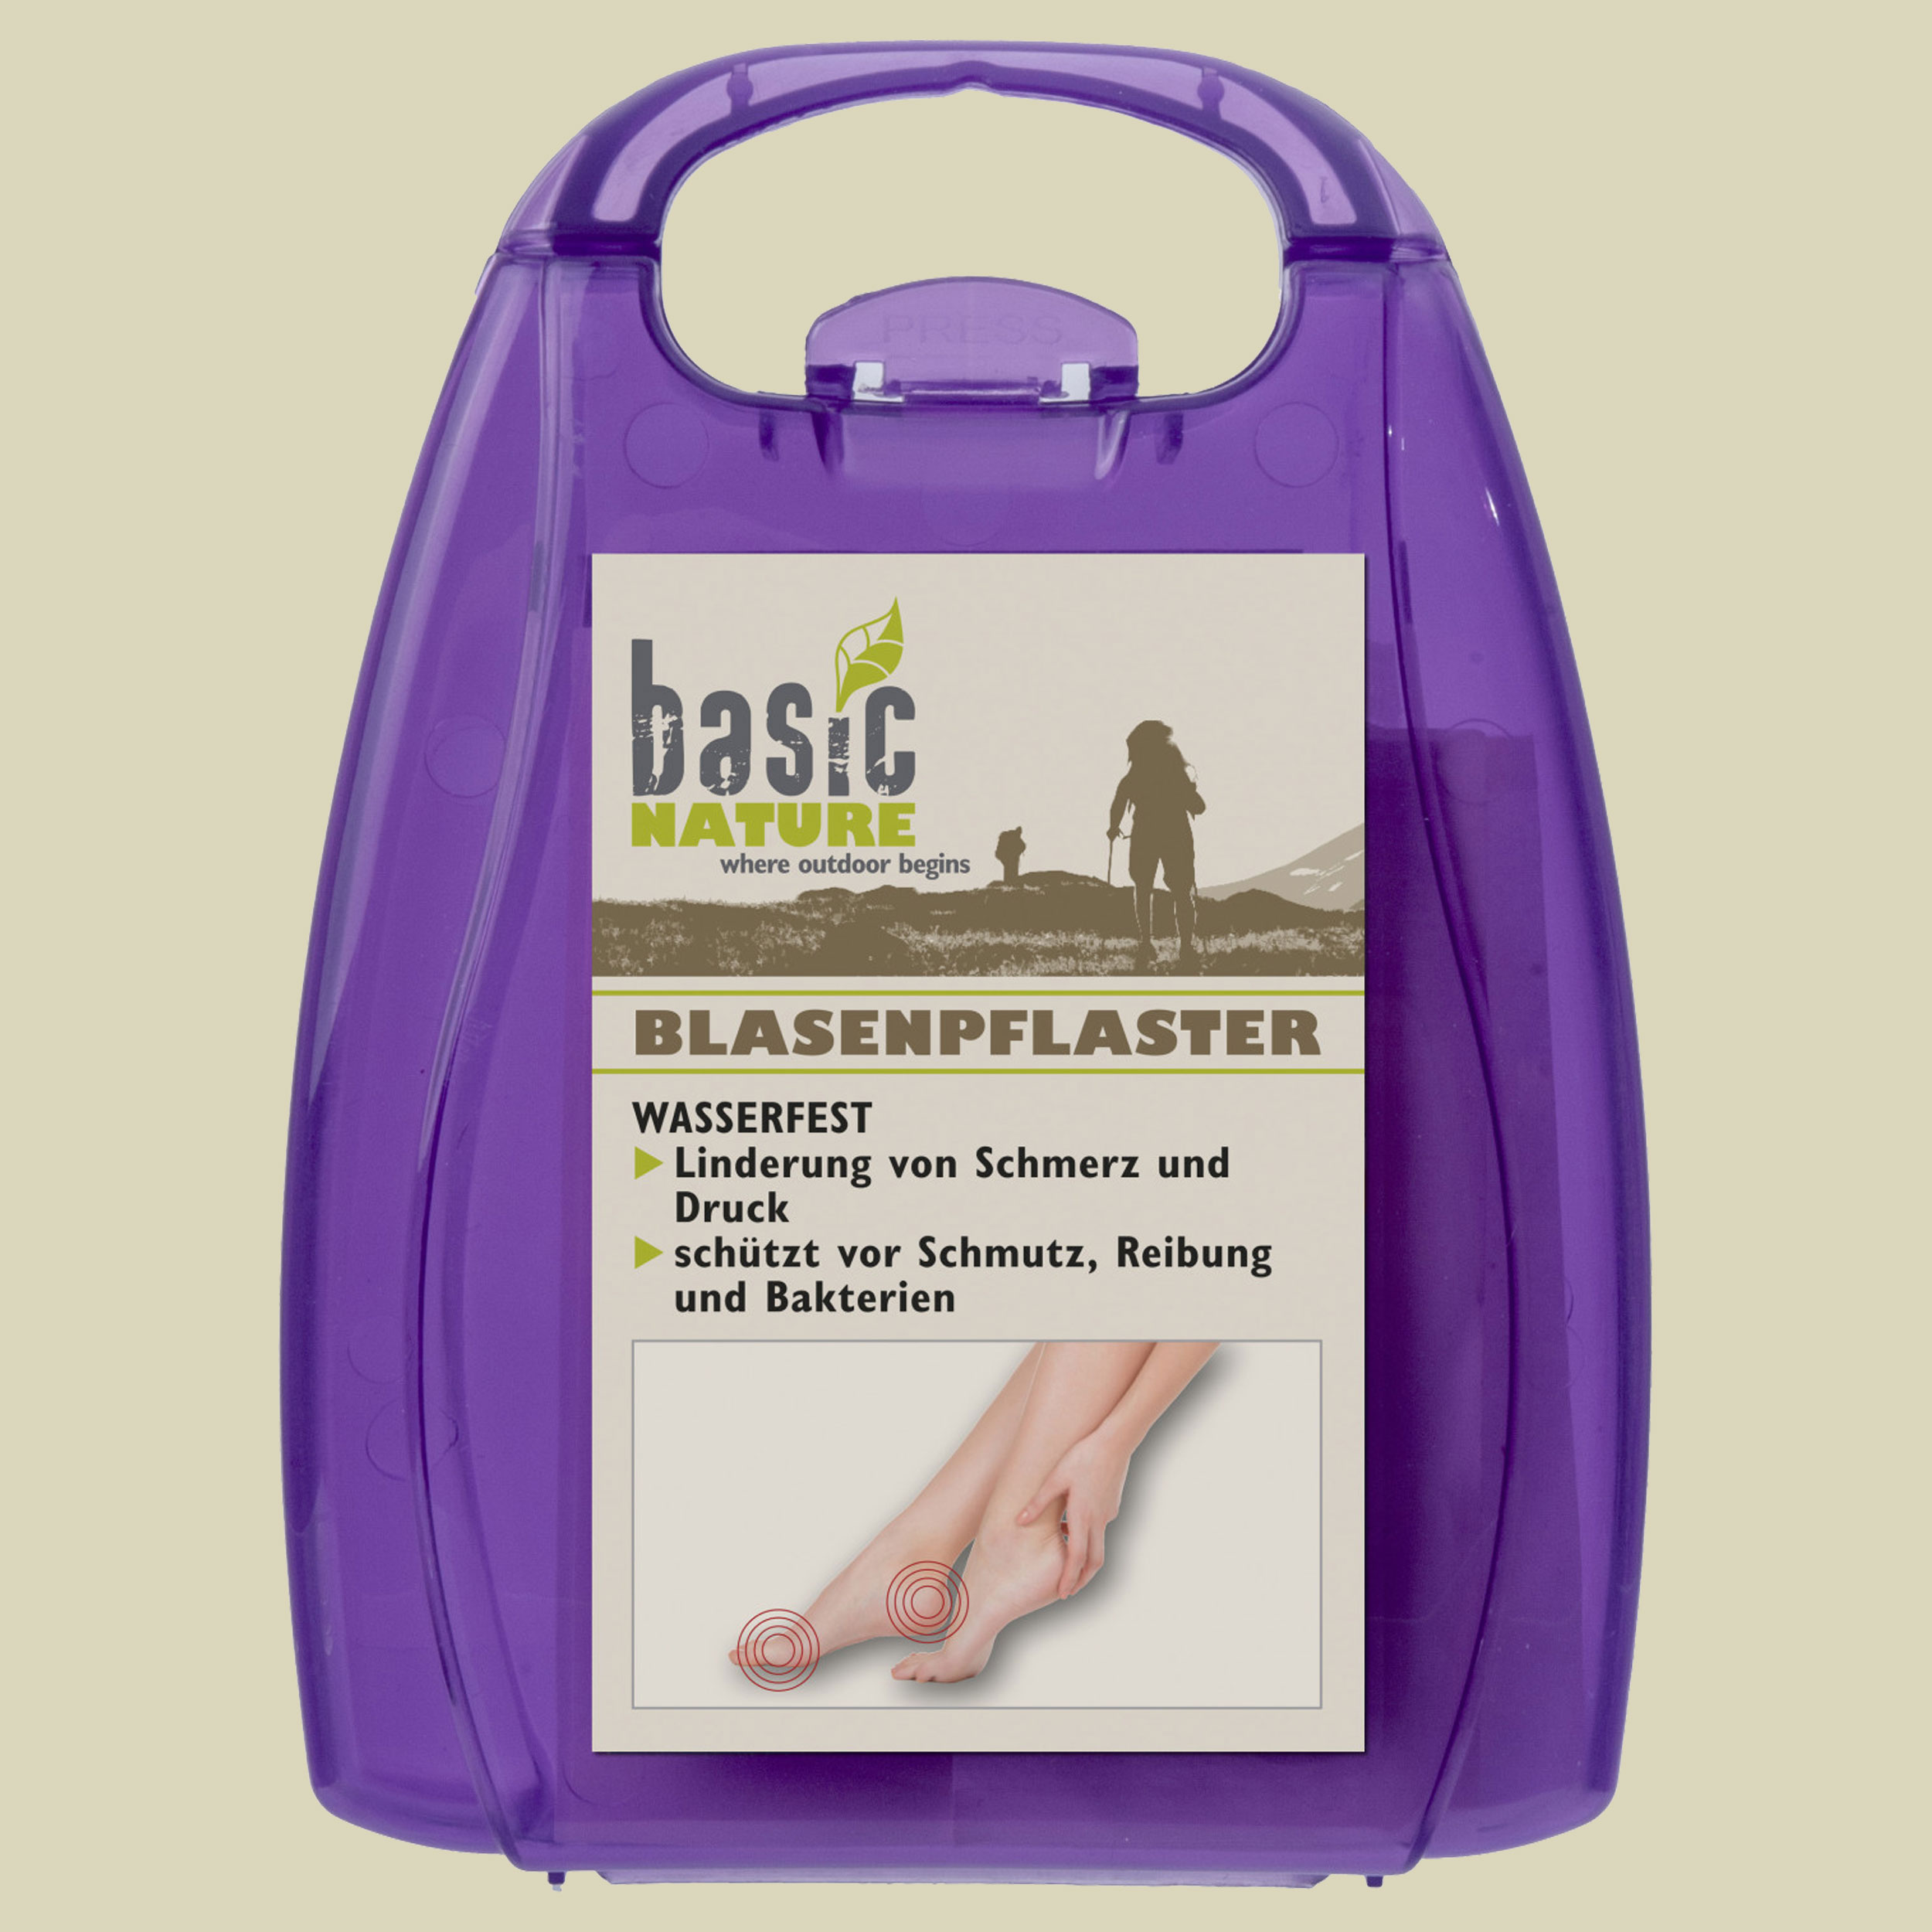 BasicNature Blasenpflaster